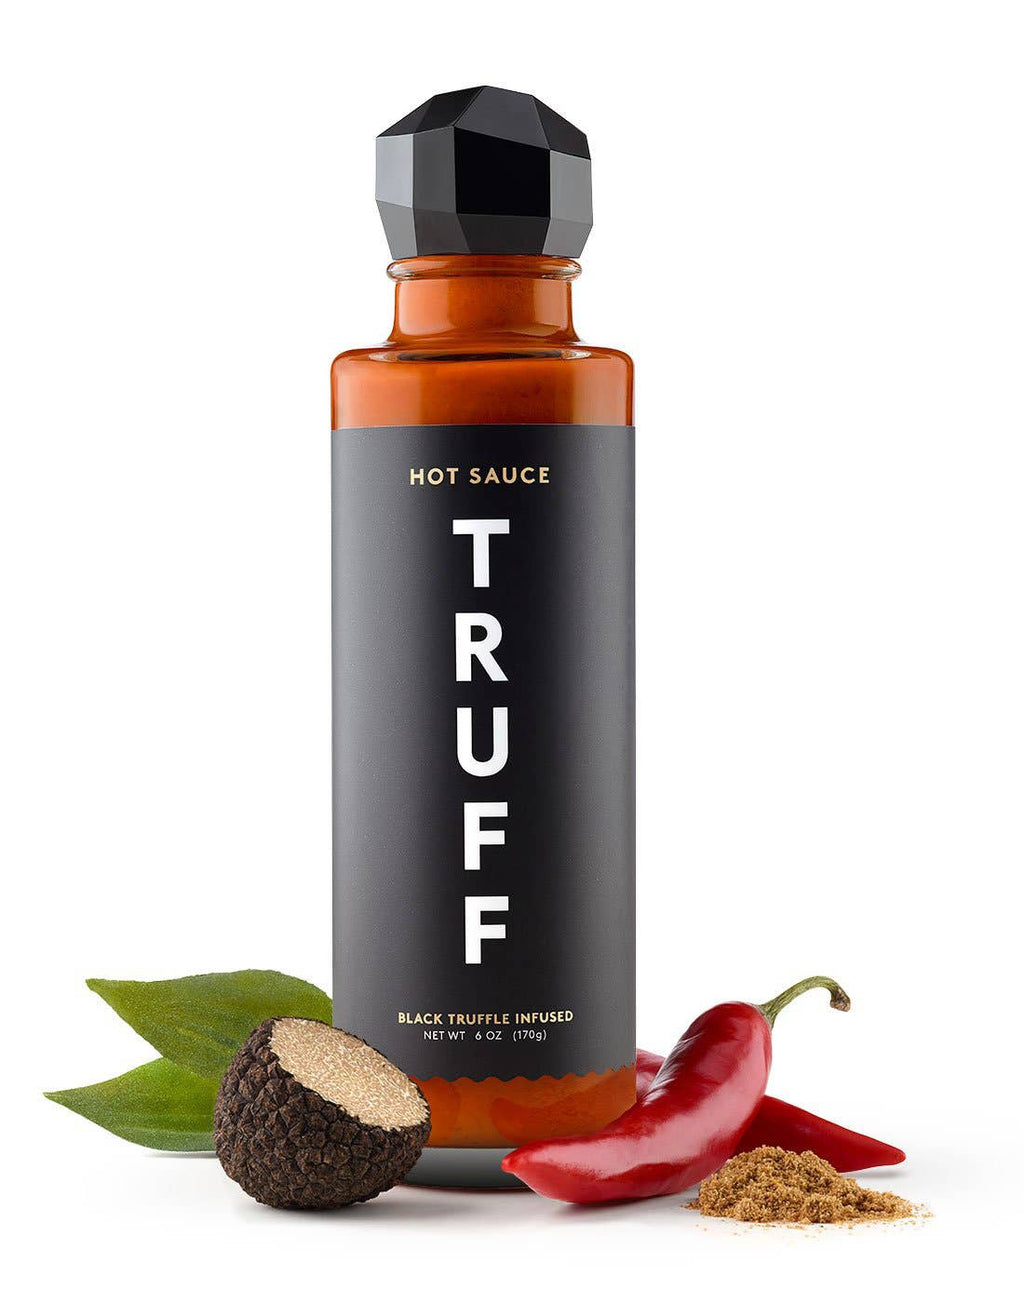 TRUFF - Black Truffle Infused Hot Sauce